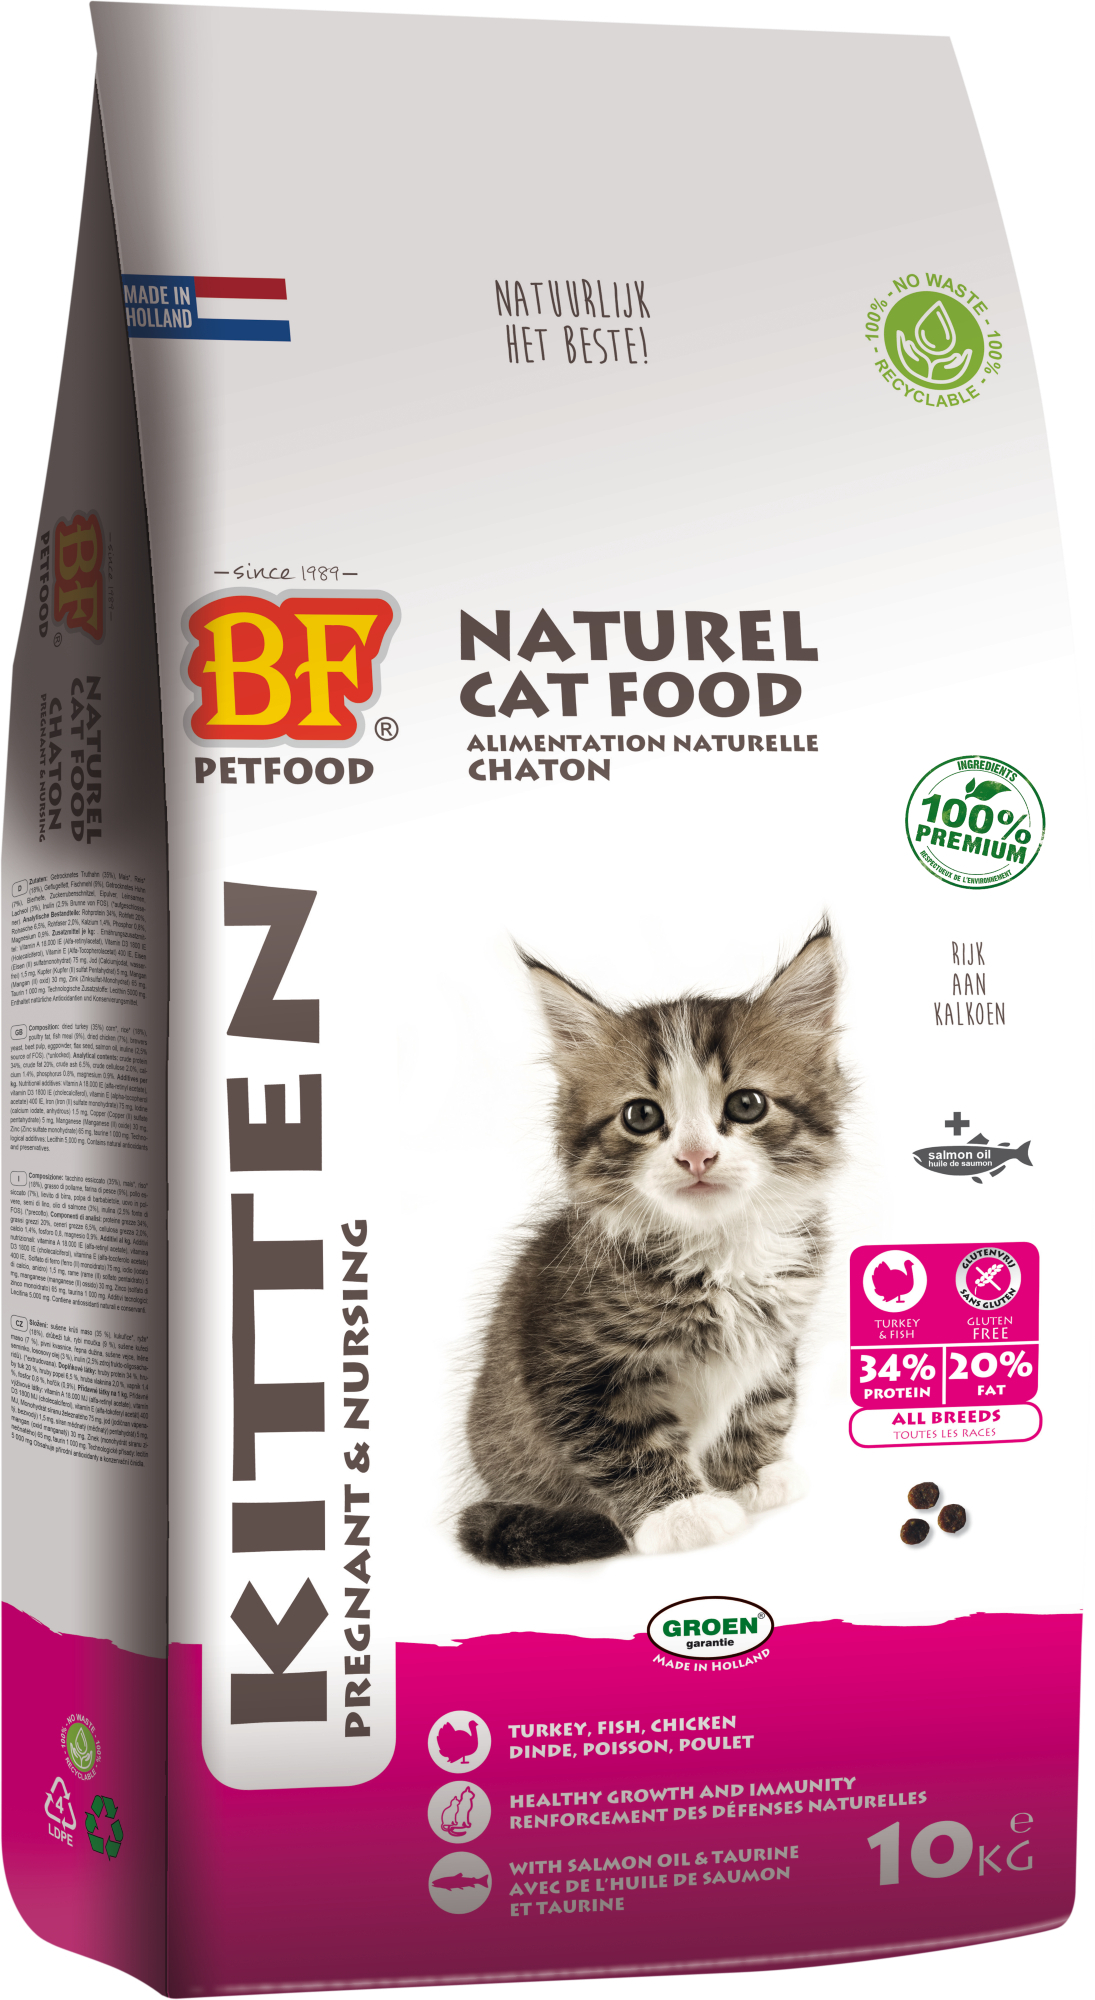 BIOFOOD Kitten Pienso 100% Natural de Pavo para Gatito